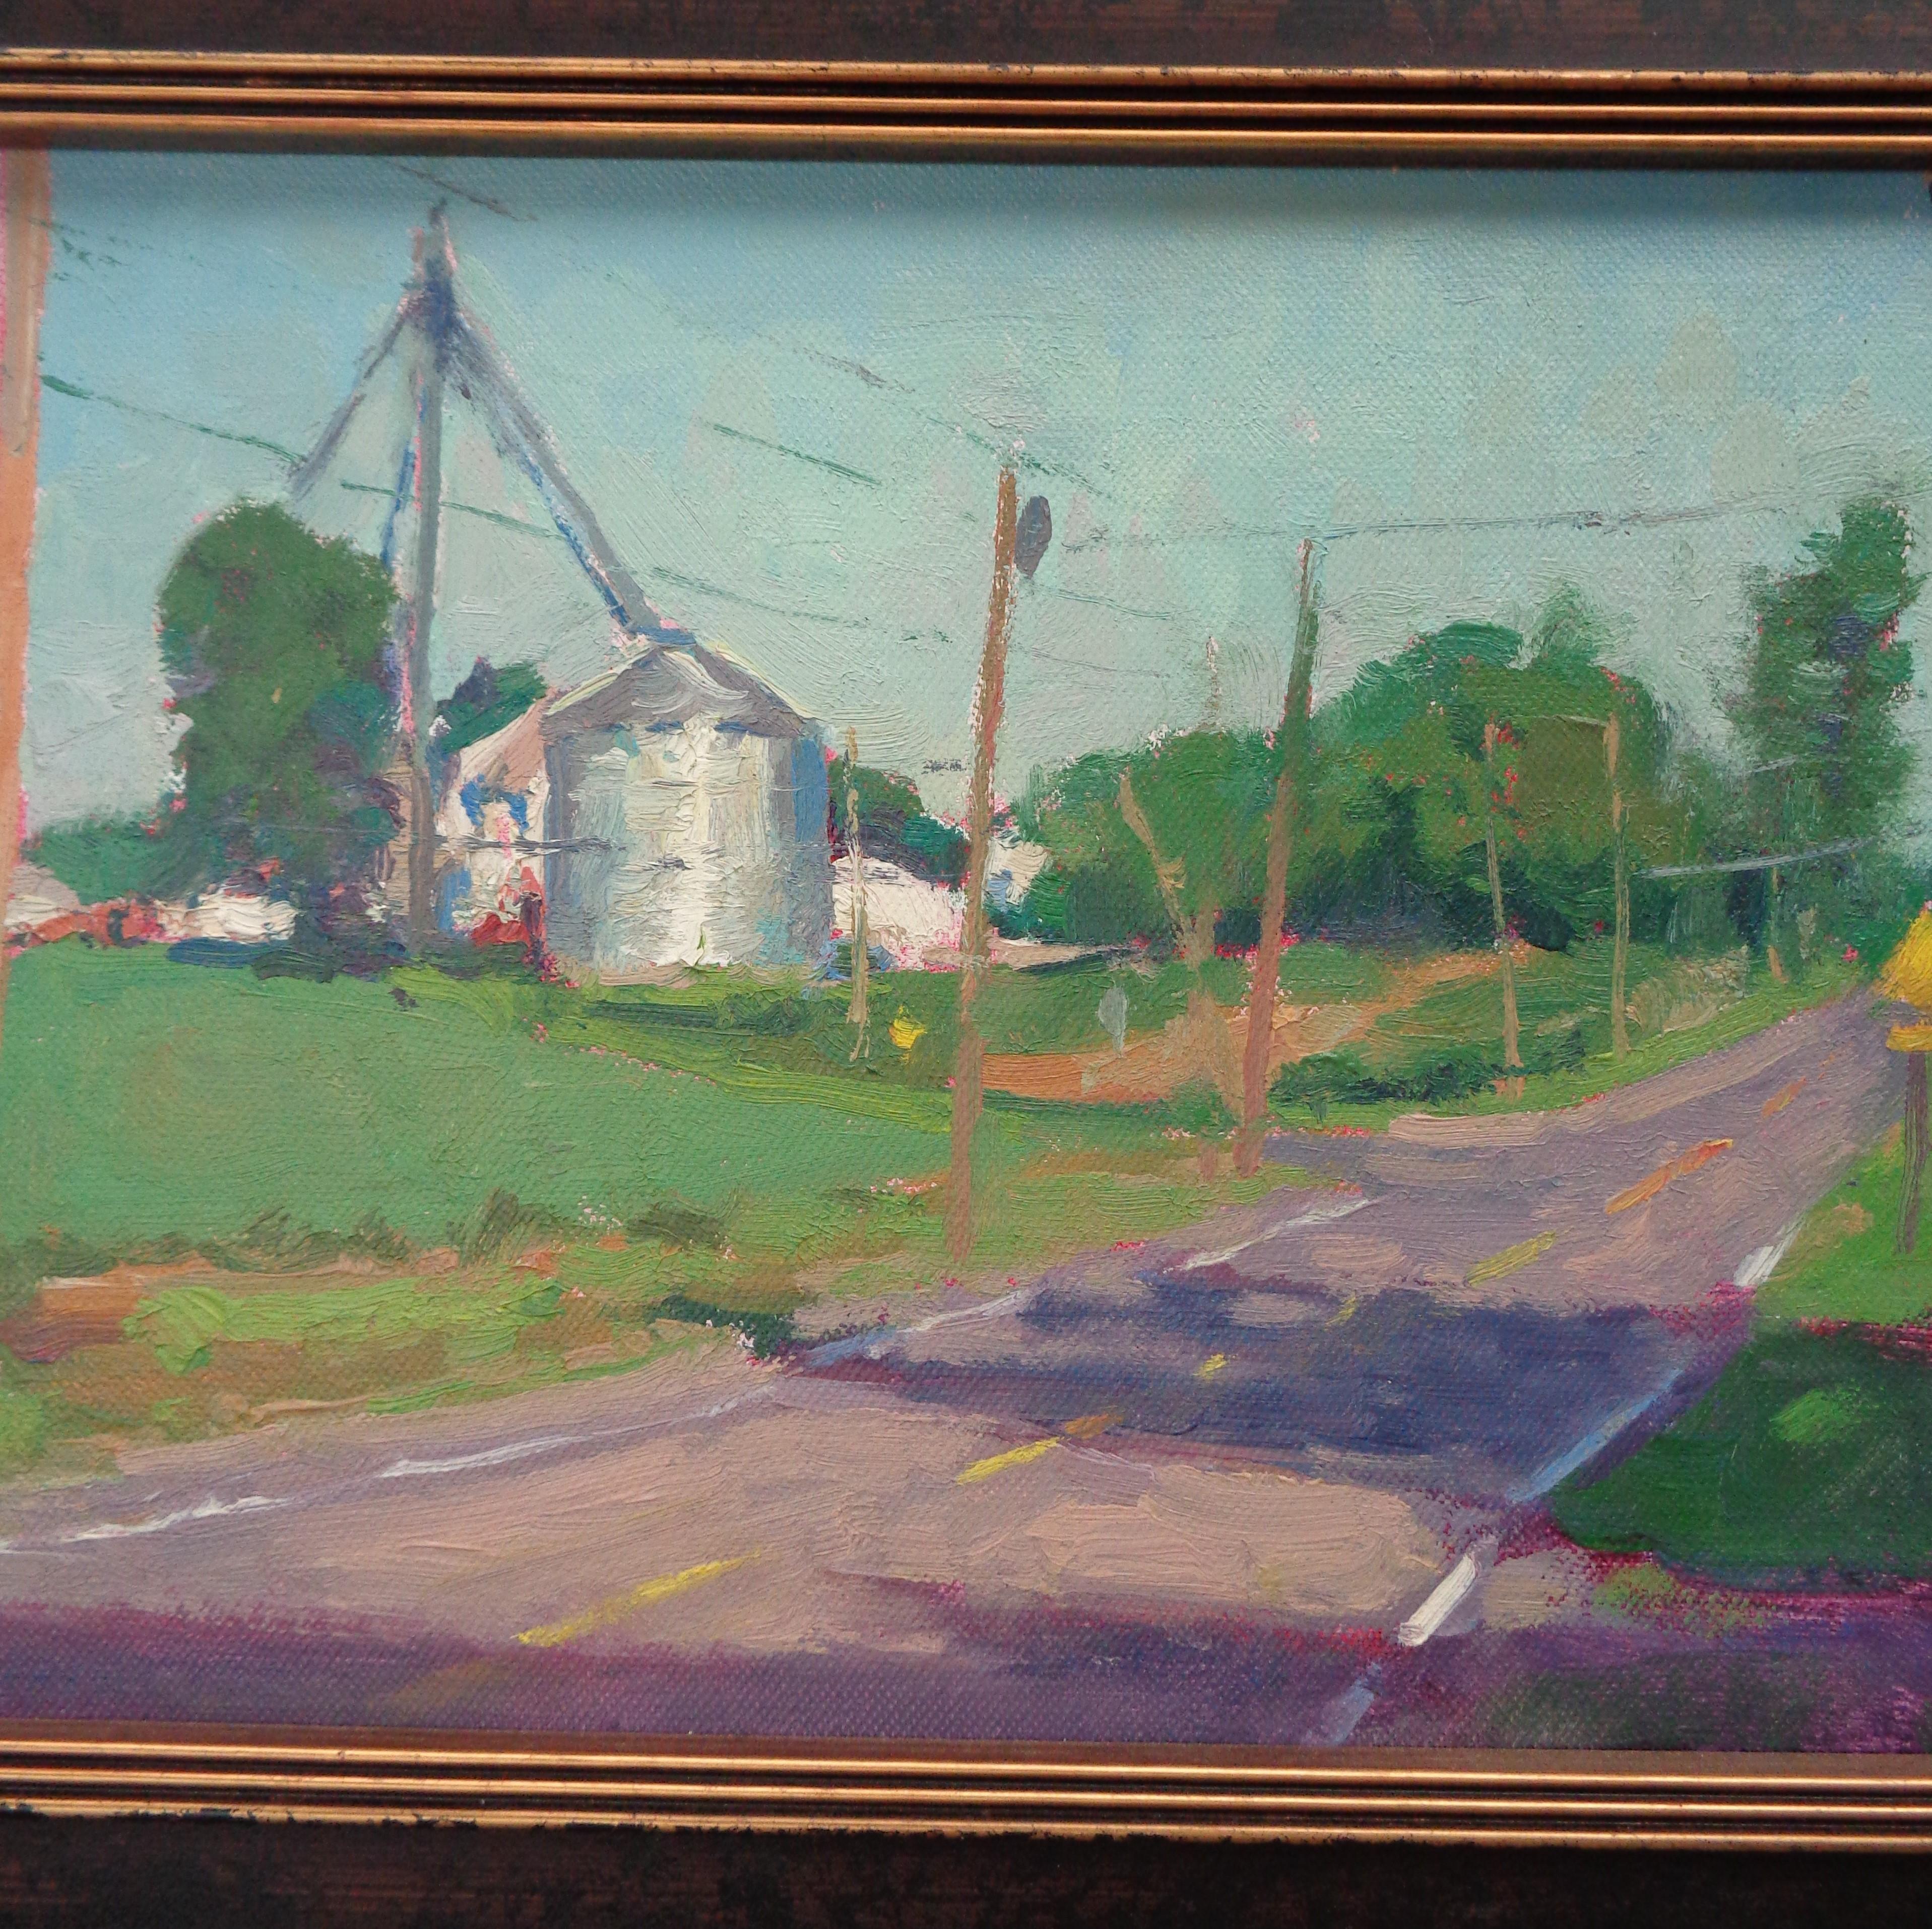  Impressionistic Rural Farm Landscape Oil Painting Michael Budden Morning Light For Sale 2